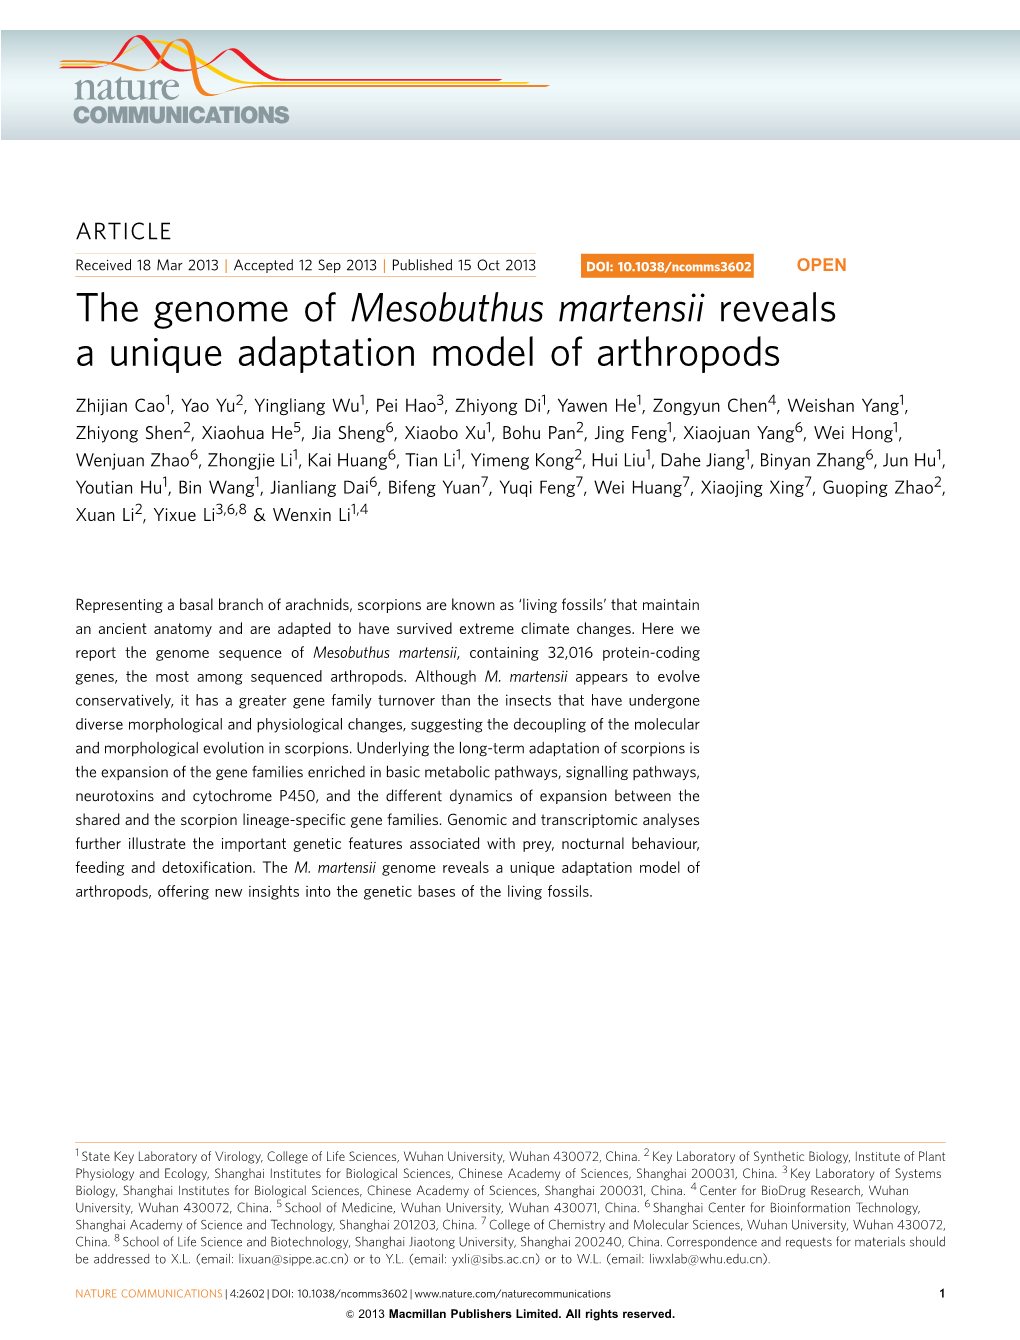 The Genome of Mesobuthus Martensii Reveals a Unique Adaptation Model of Arthropods